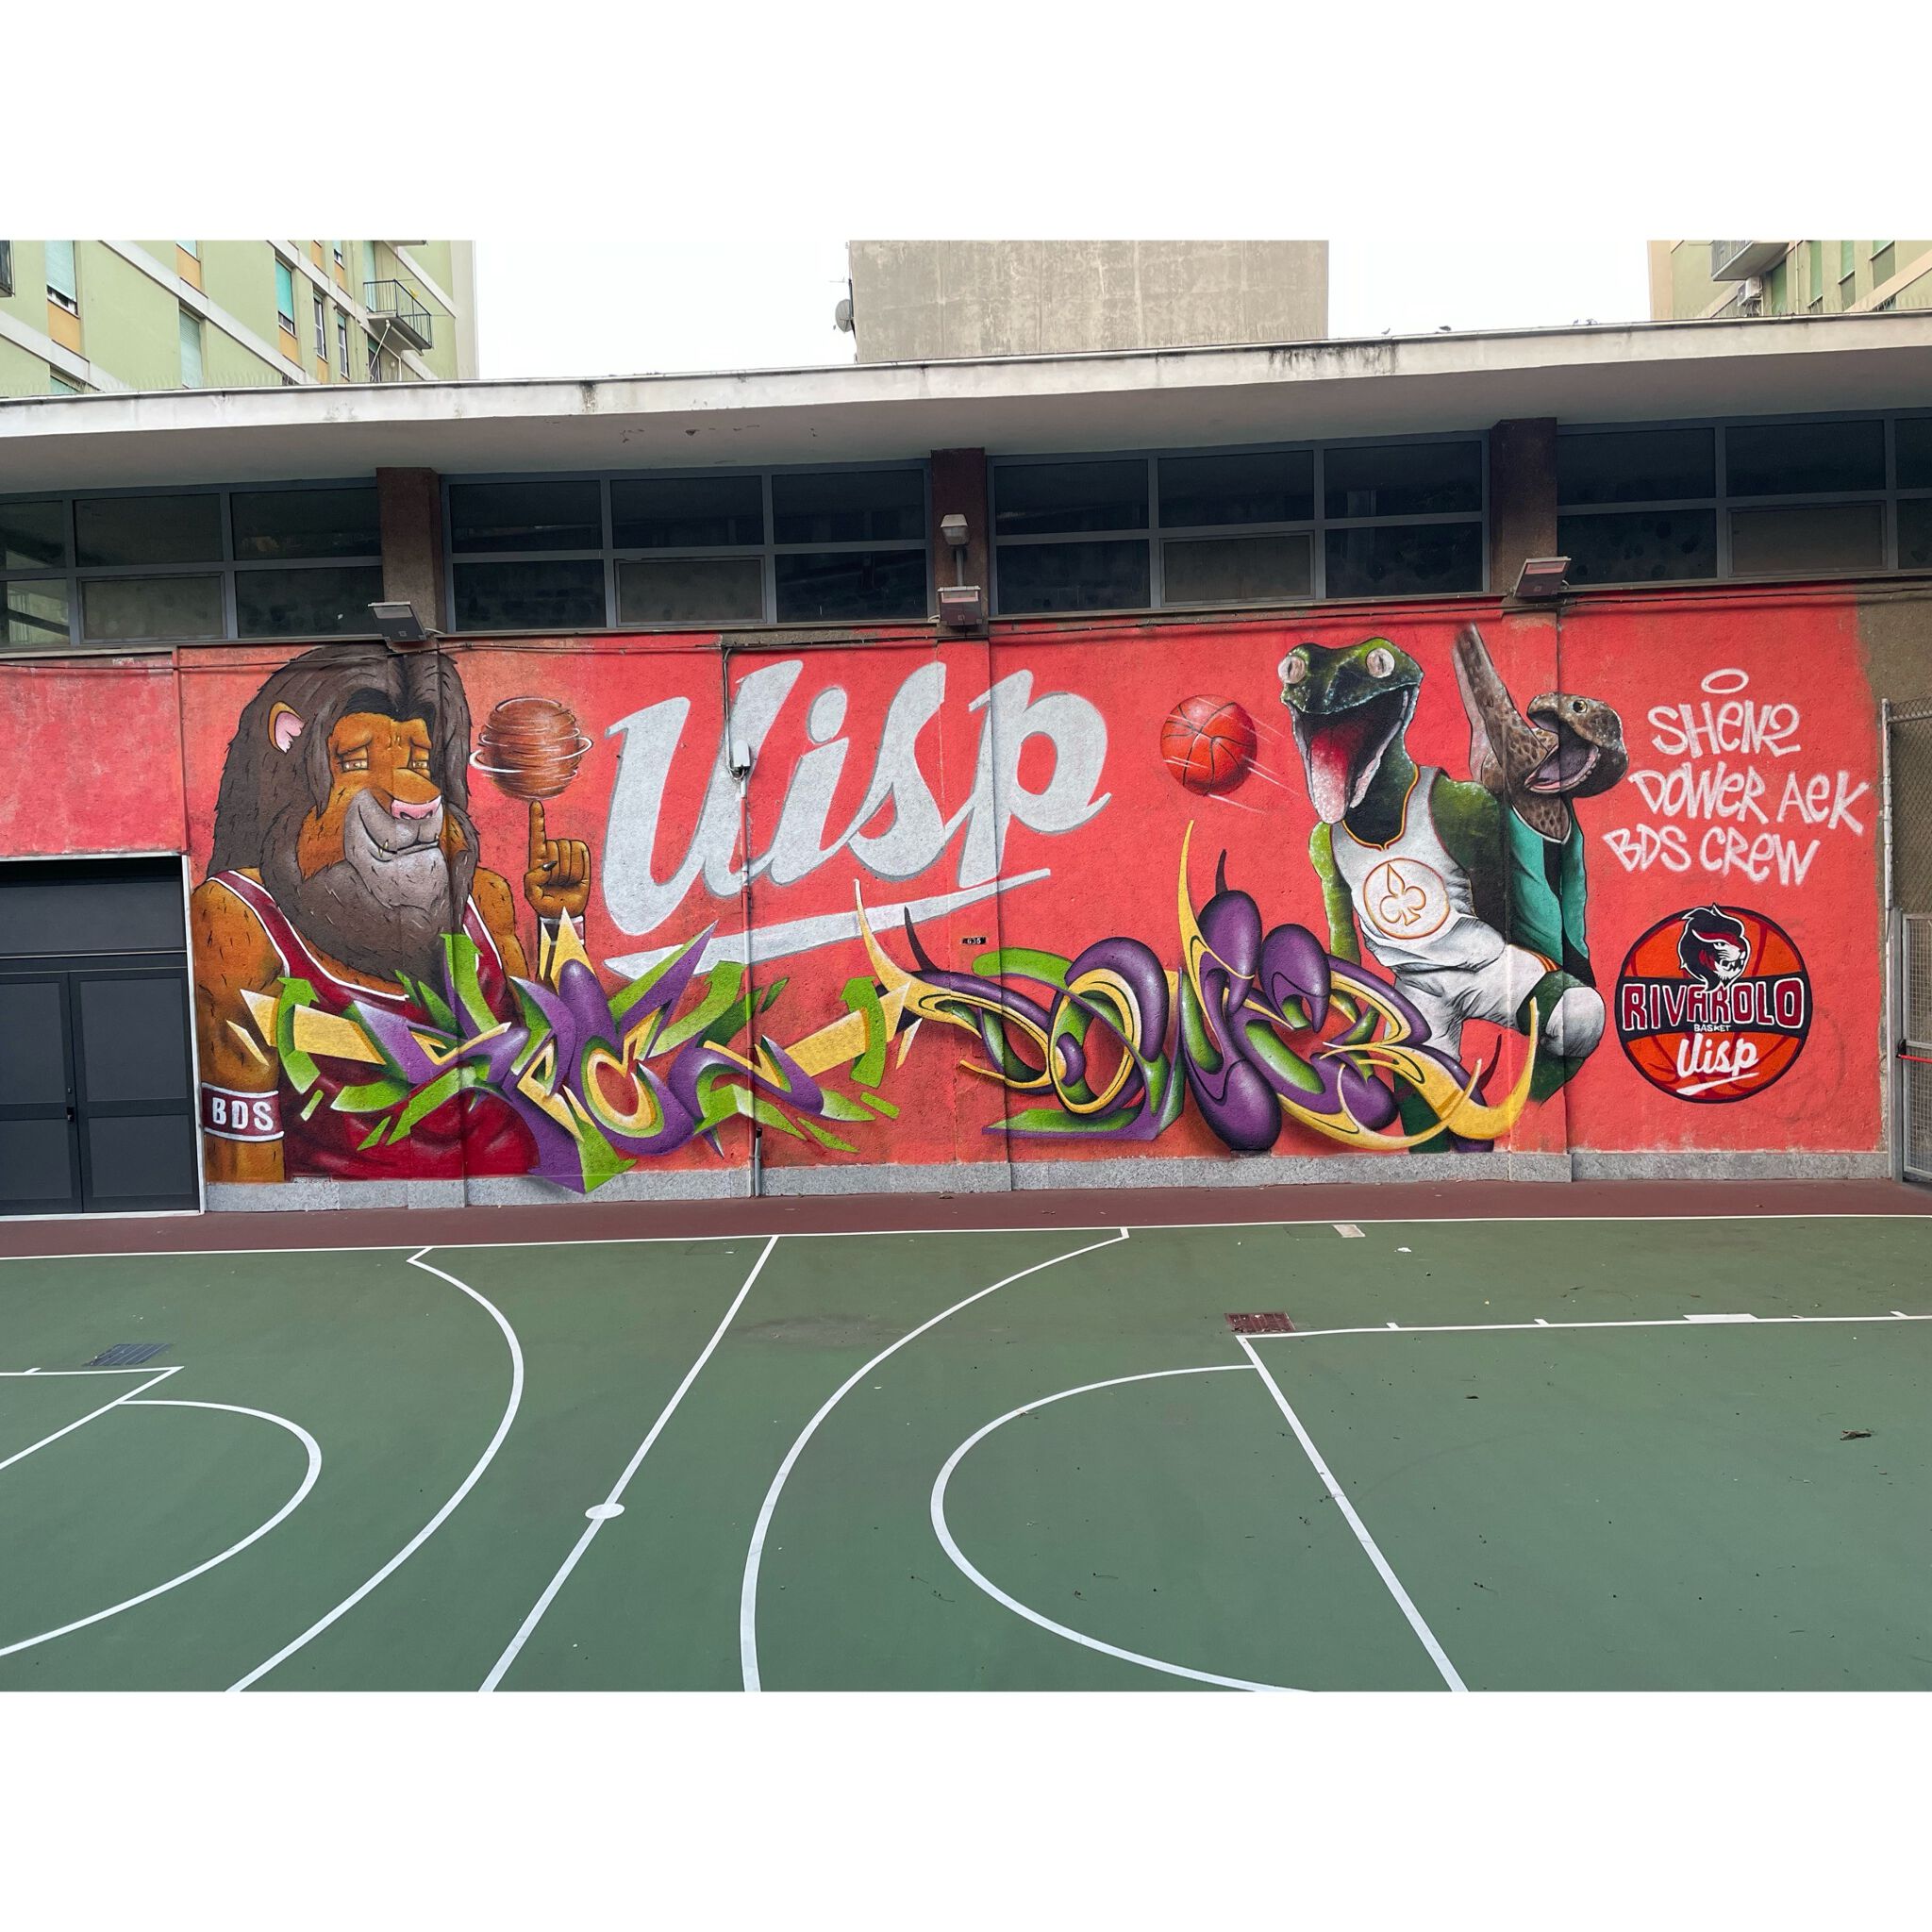 Shentwo, Alfo_Dower, Aek_bds&mdash;UISP  Basketball